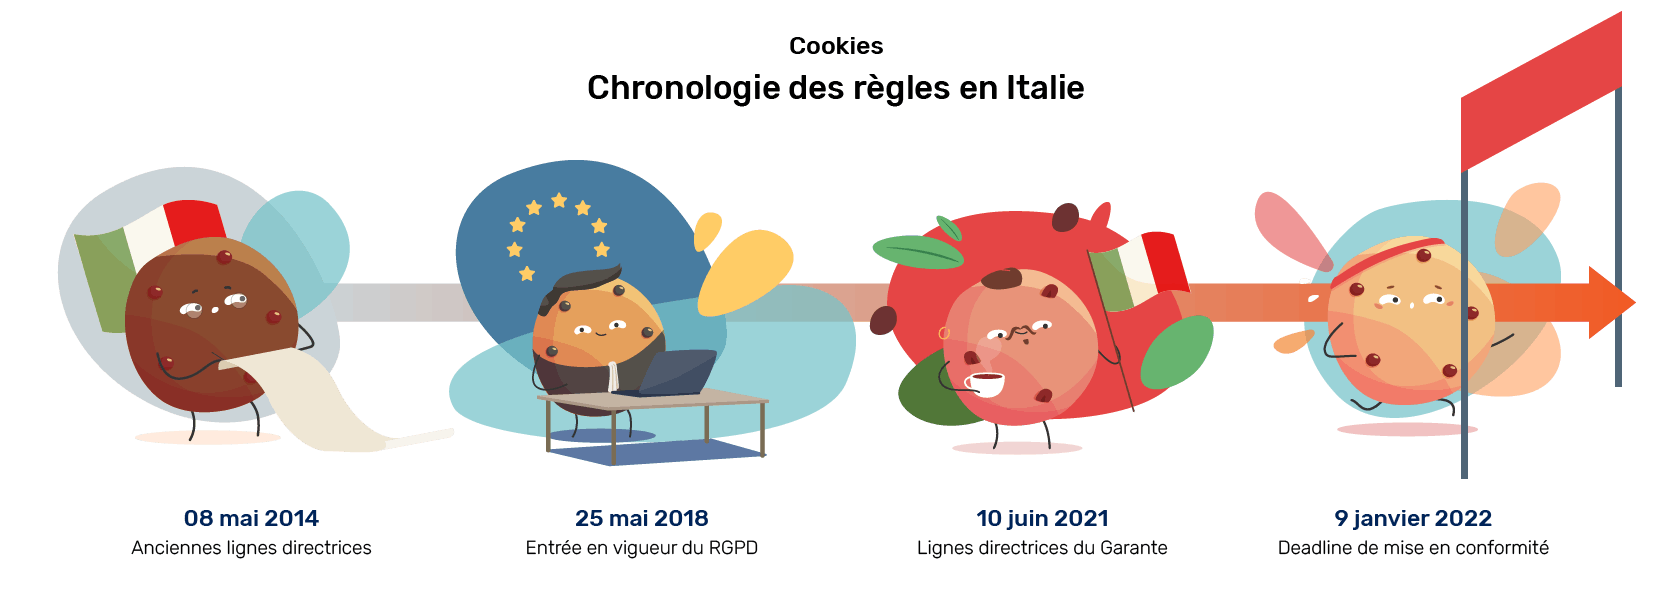 Cookies chronologie des règles RGPD en Italie 